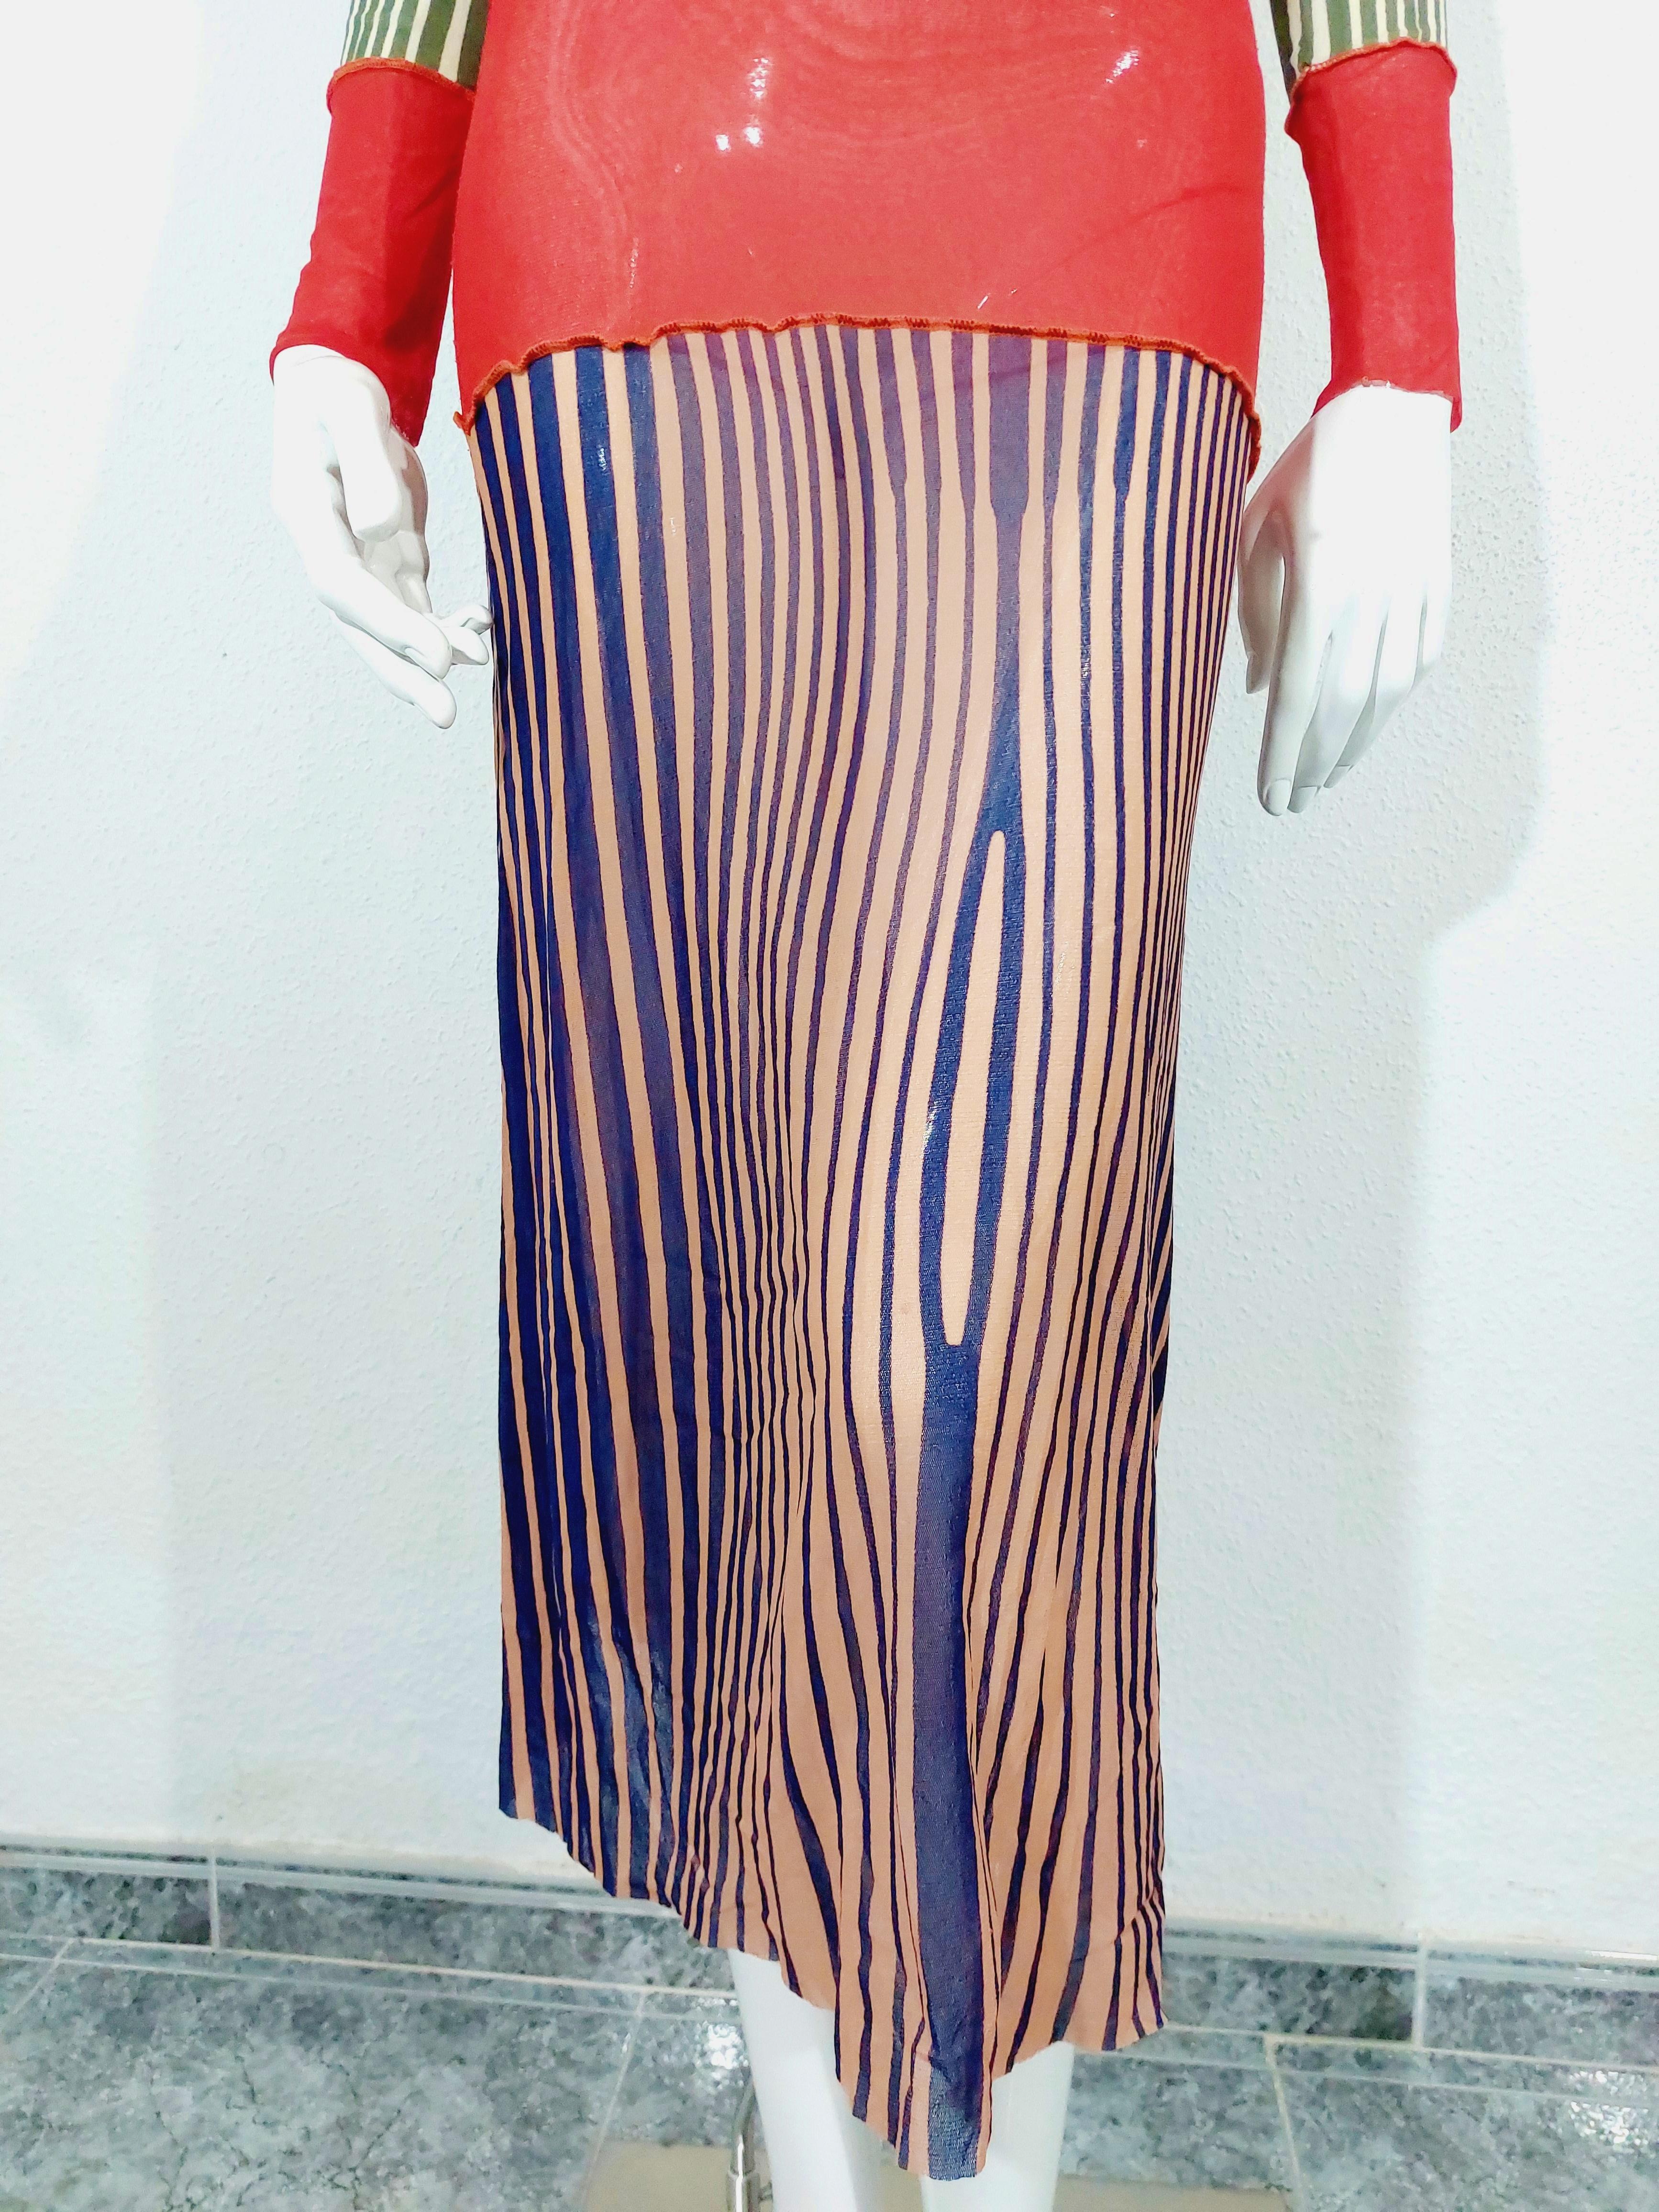 Jean Paul Gaultier Optical Illusion Nude Ethic Trompe l'oeil Vanessa Guide Dress en vente 2